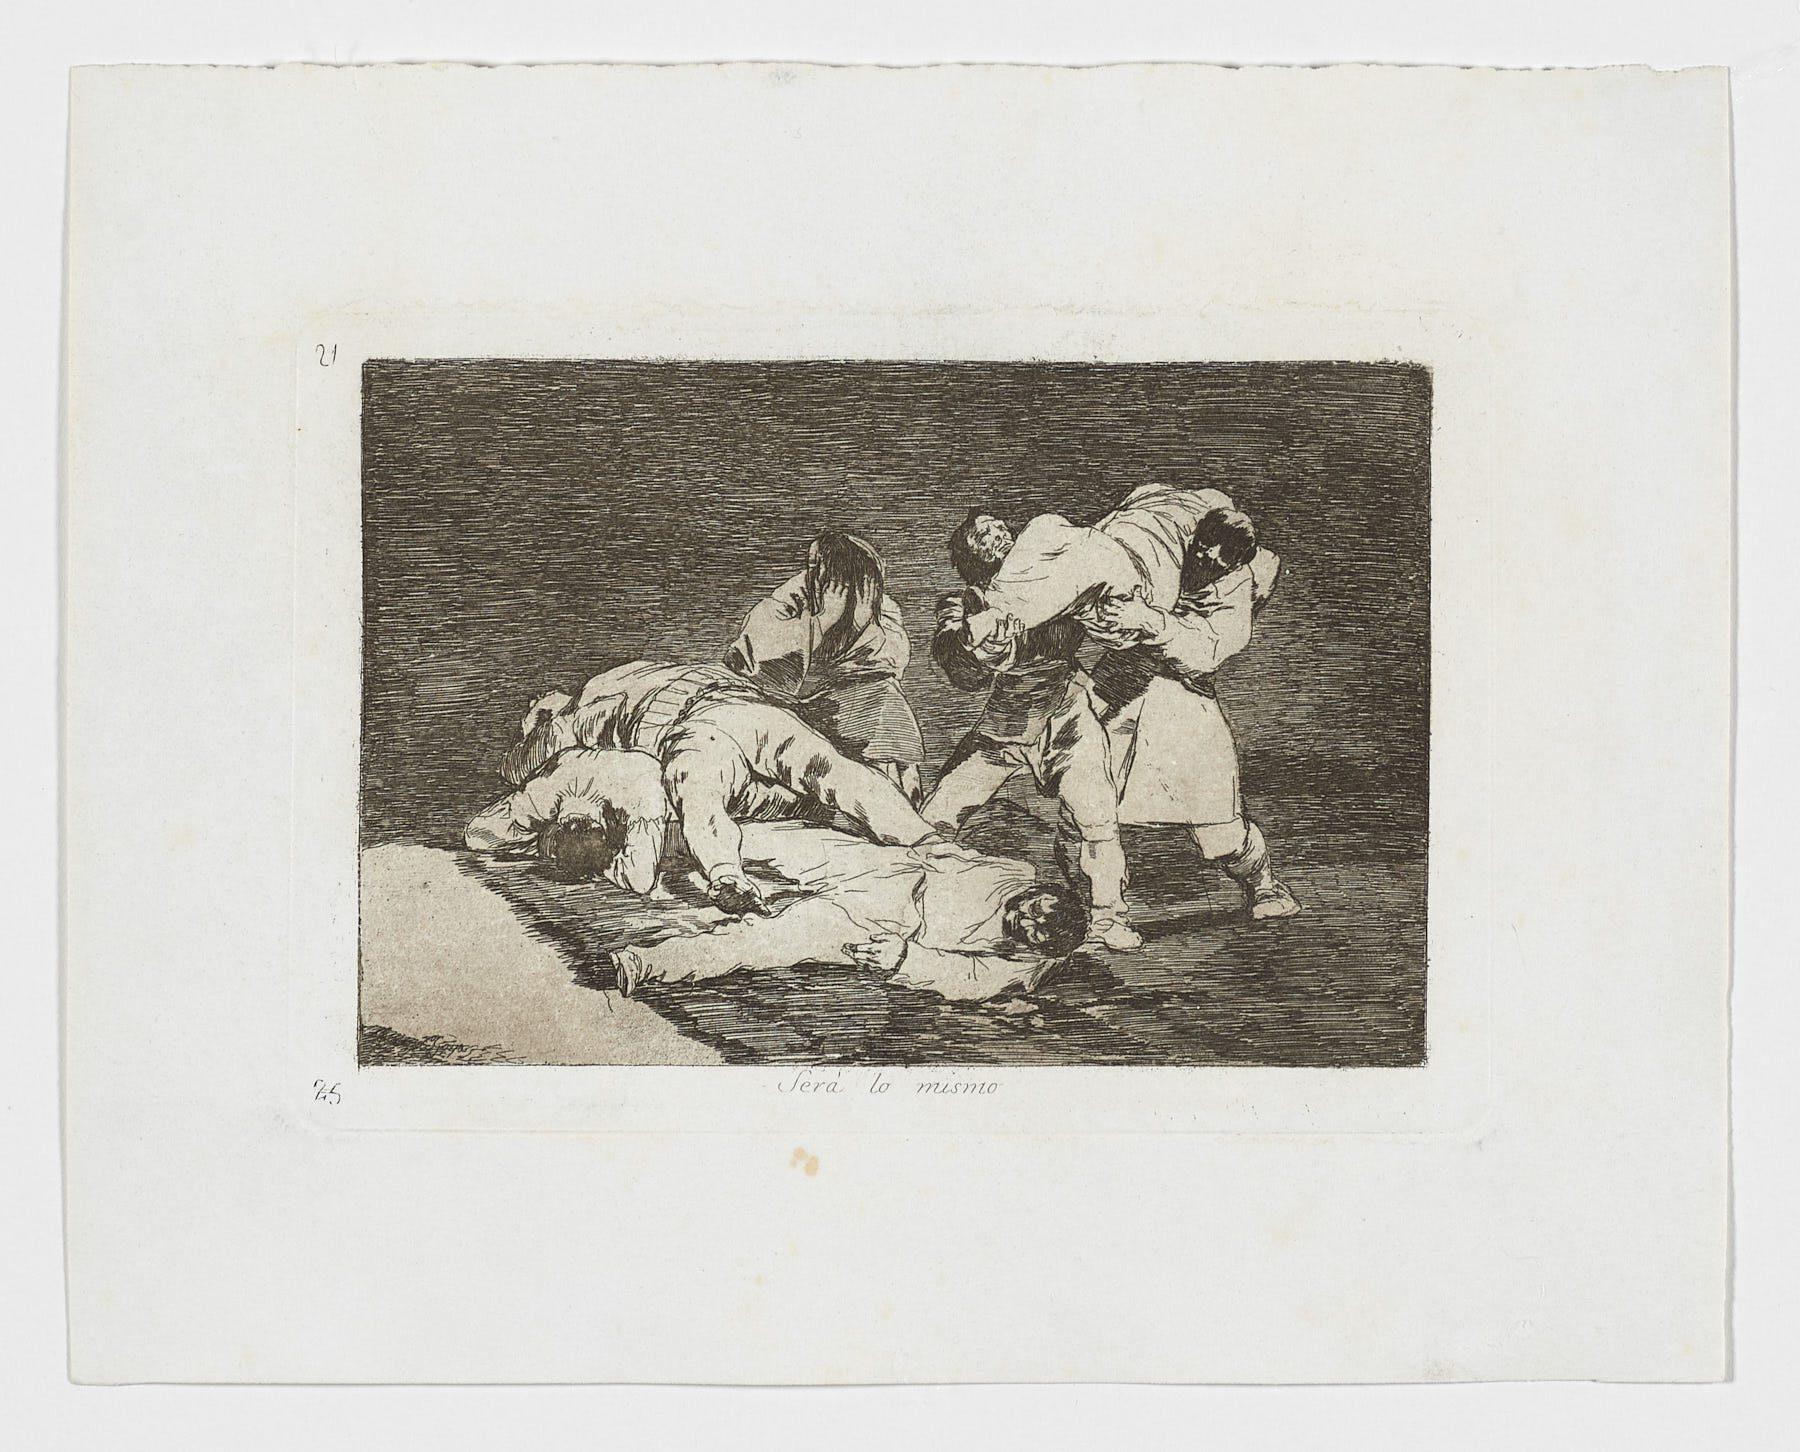 What kind of art did Francisco Goya do?